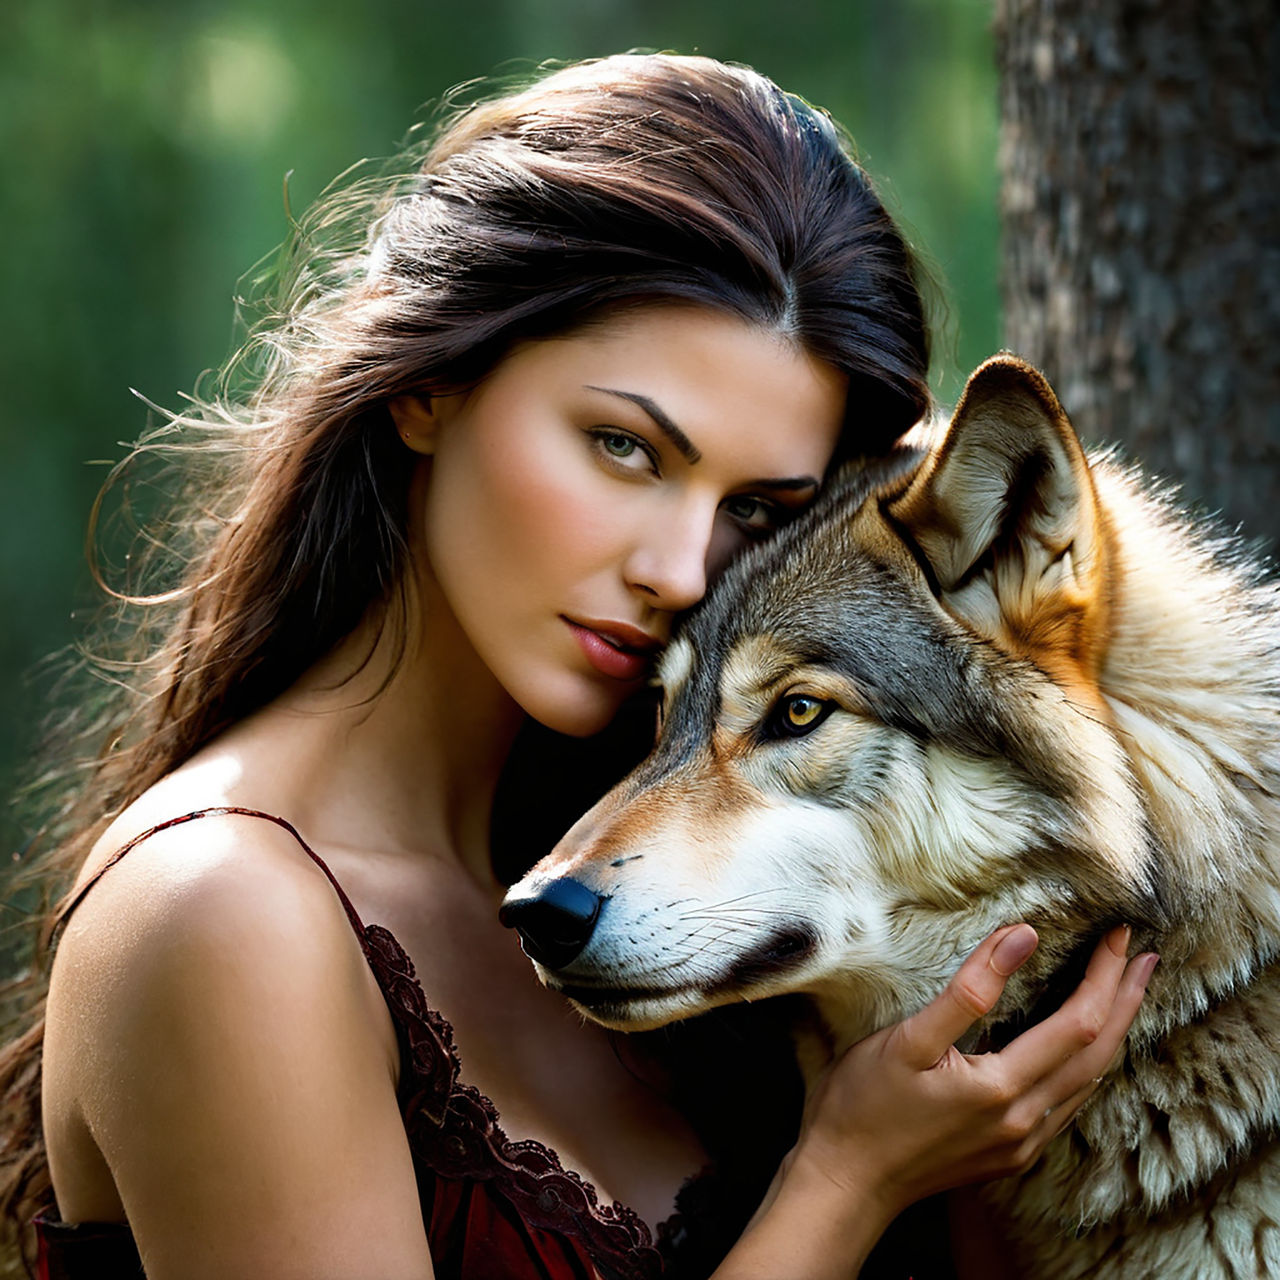 A Woman's Spirit, A Wolf's Soul by samitdigitalart on DeviantArt